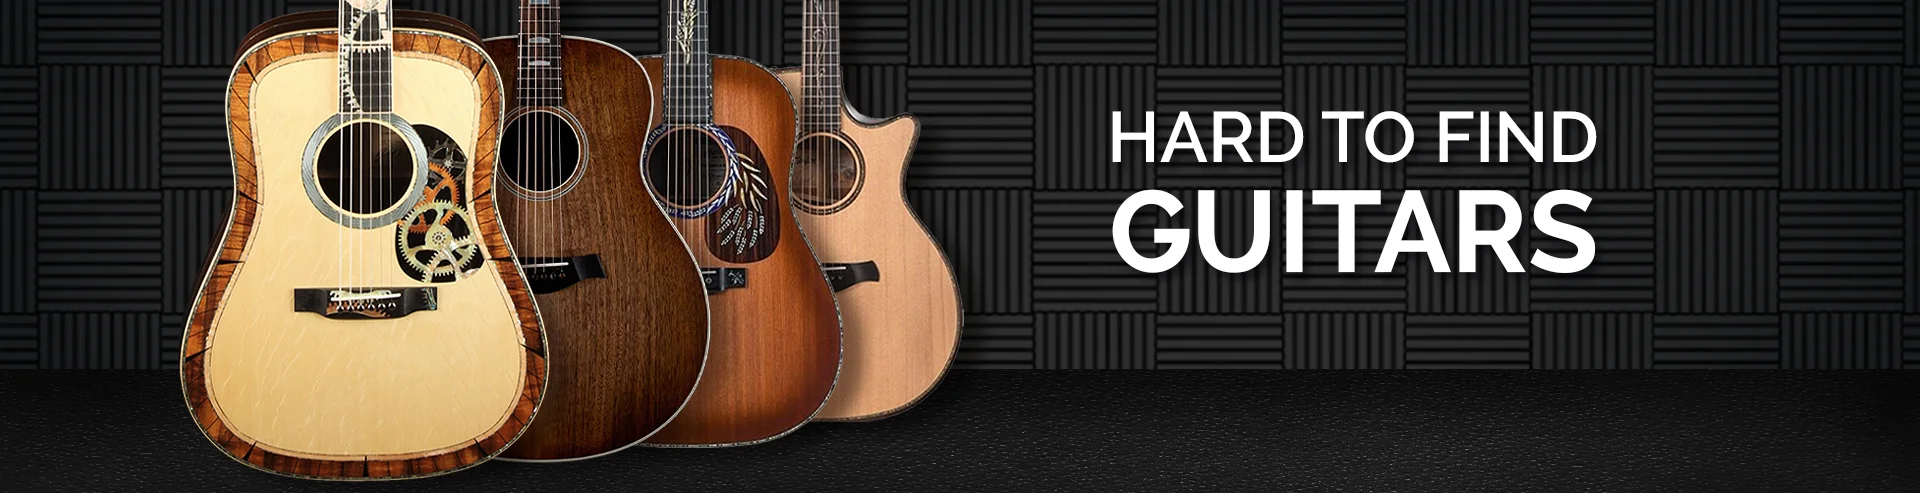 VM-Hero-Hard to find Guitars-1920x493.webp